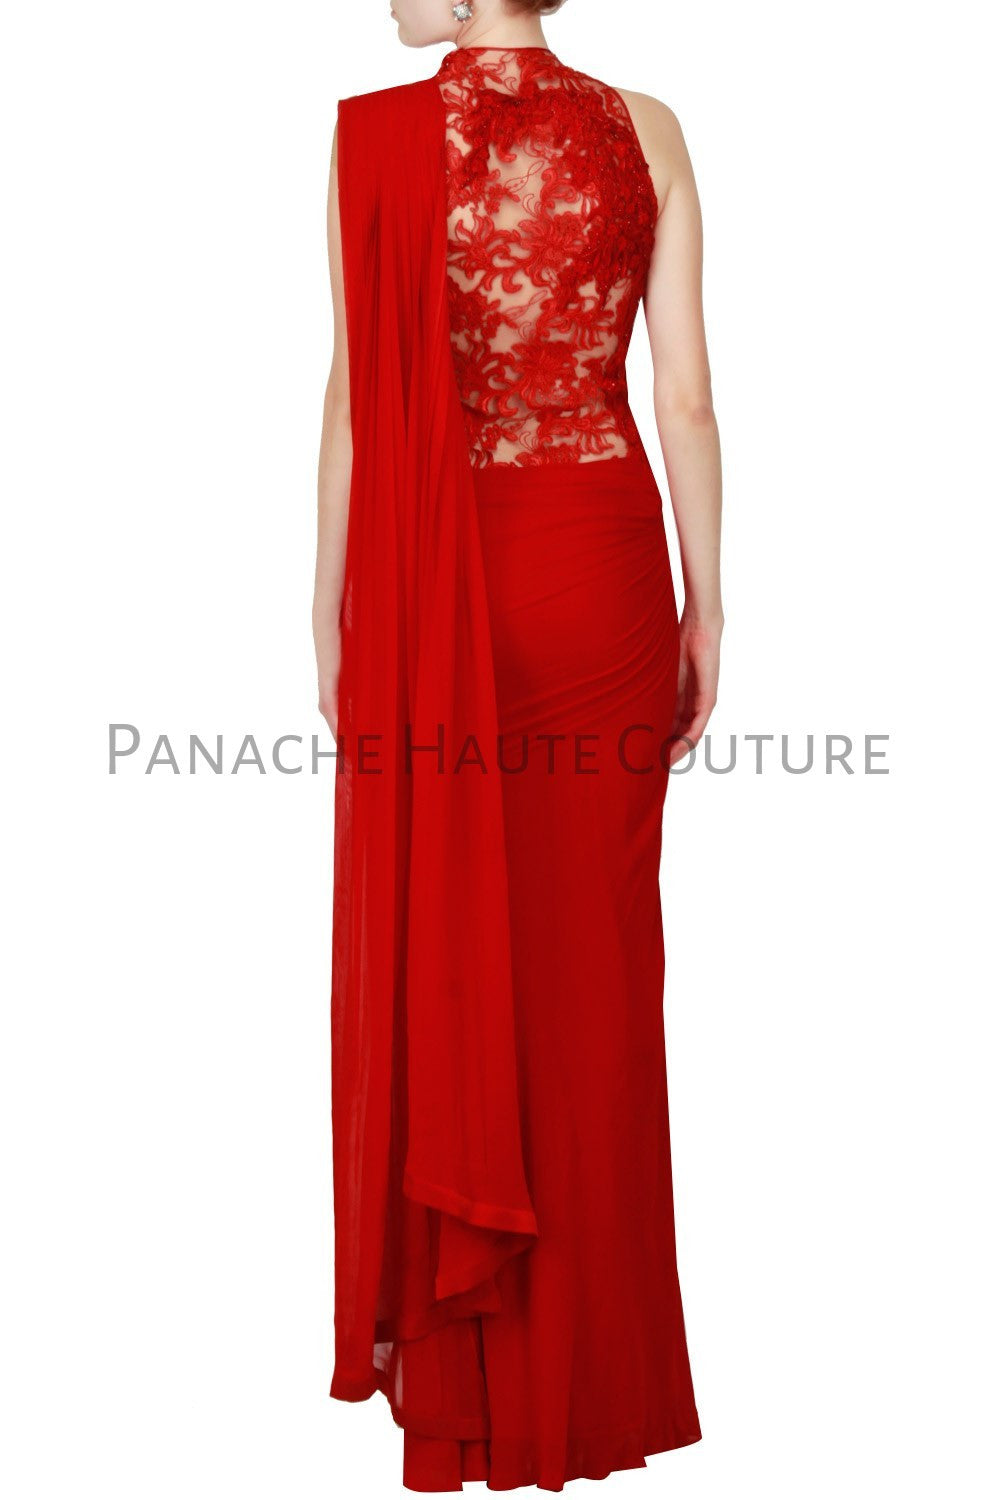 saree gown design